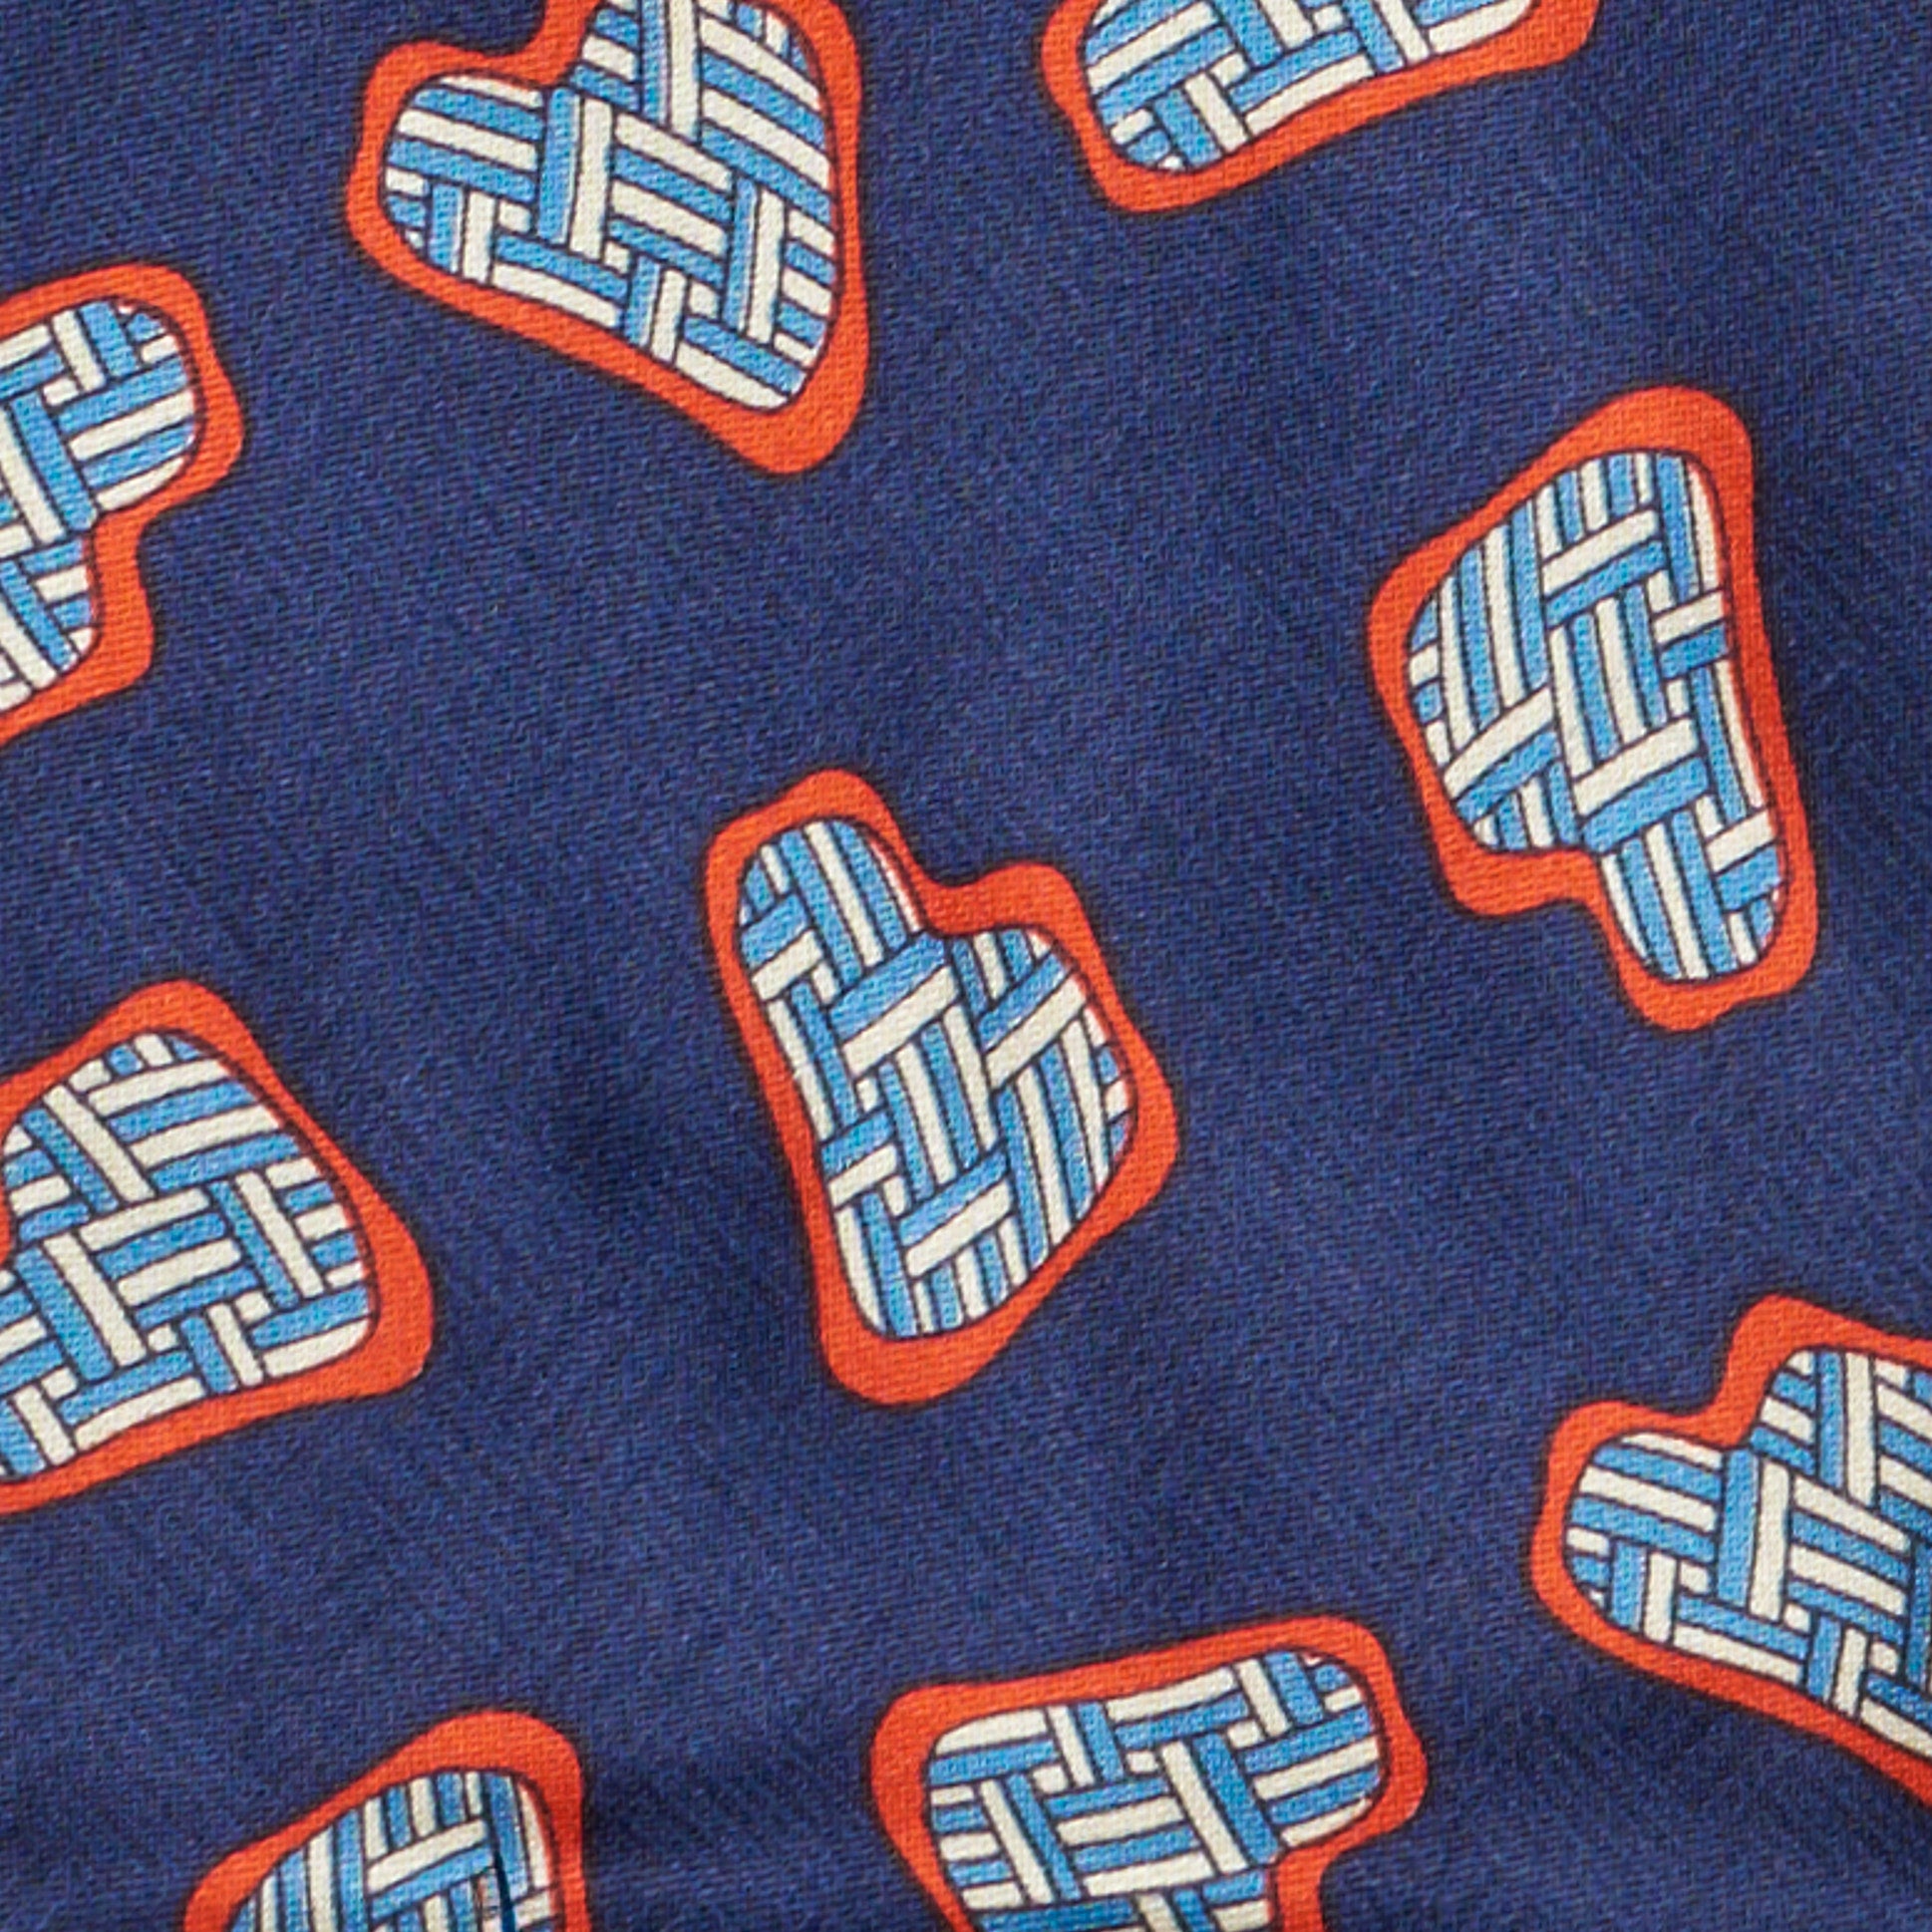 BOTTEGA VENETA Handmade Navy Blue Geometry Pattern Design Silk Tie